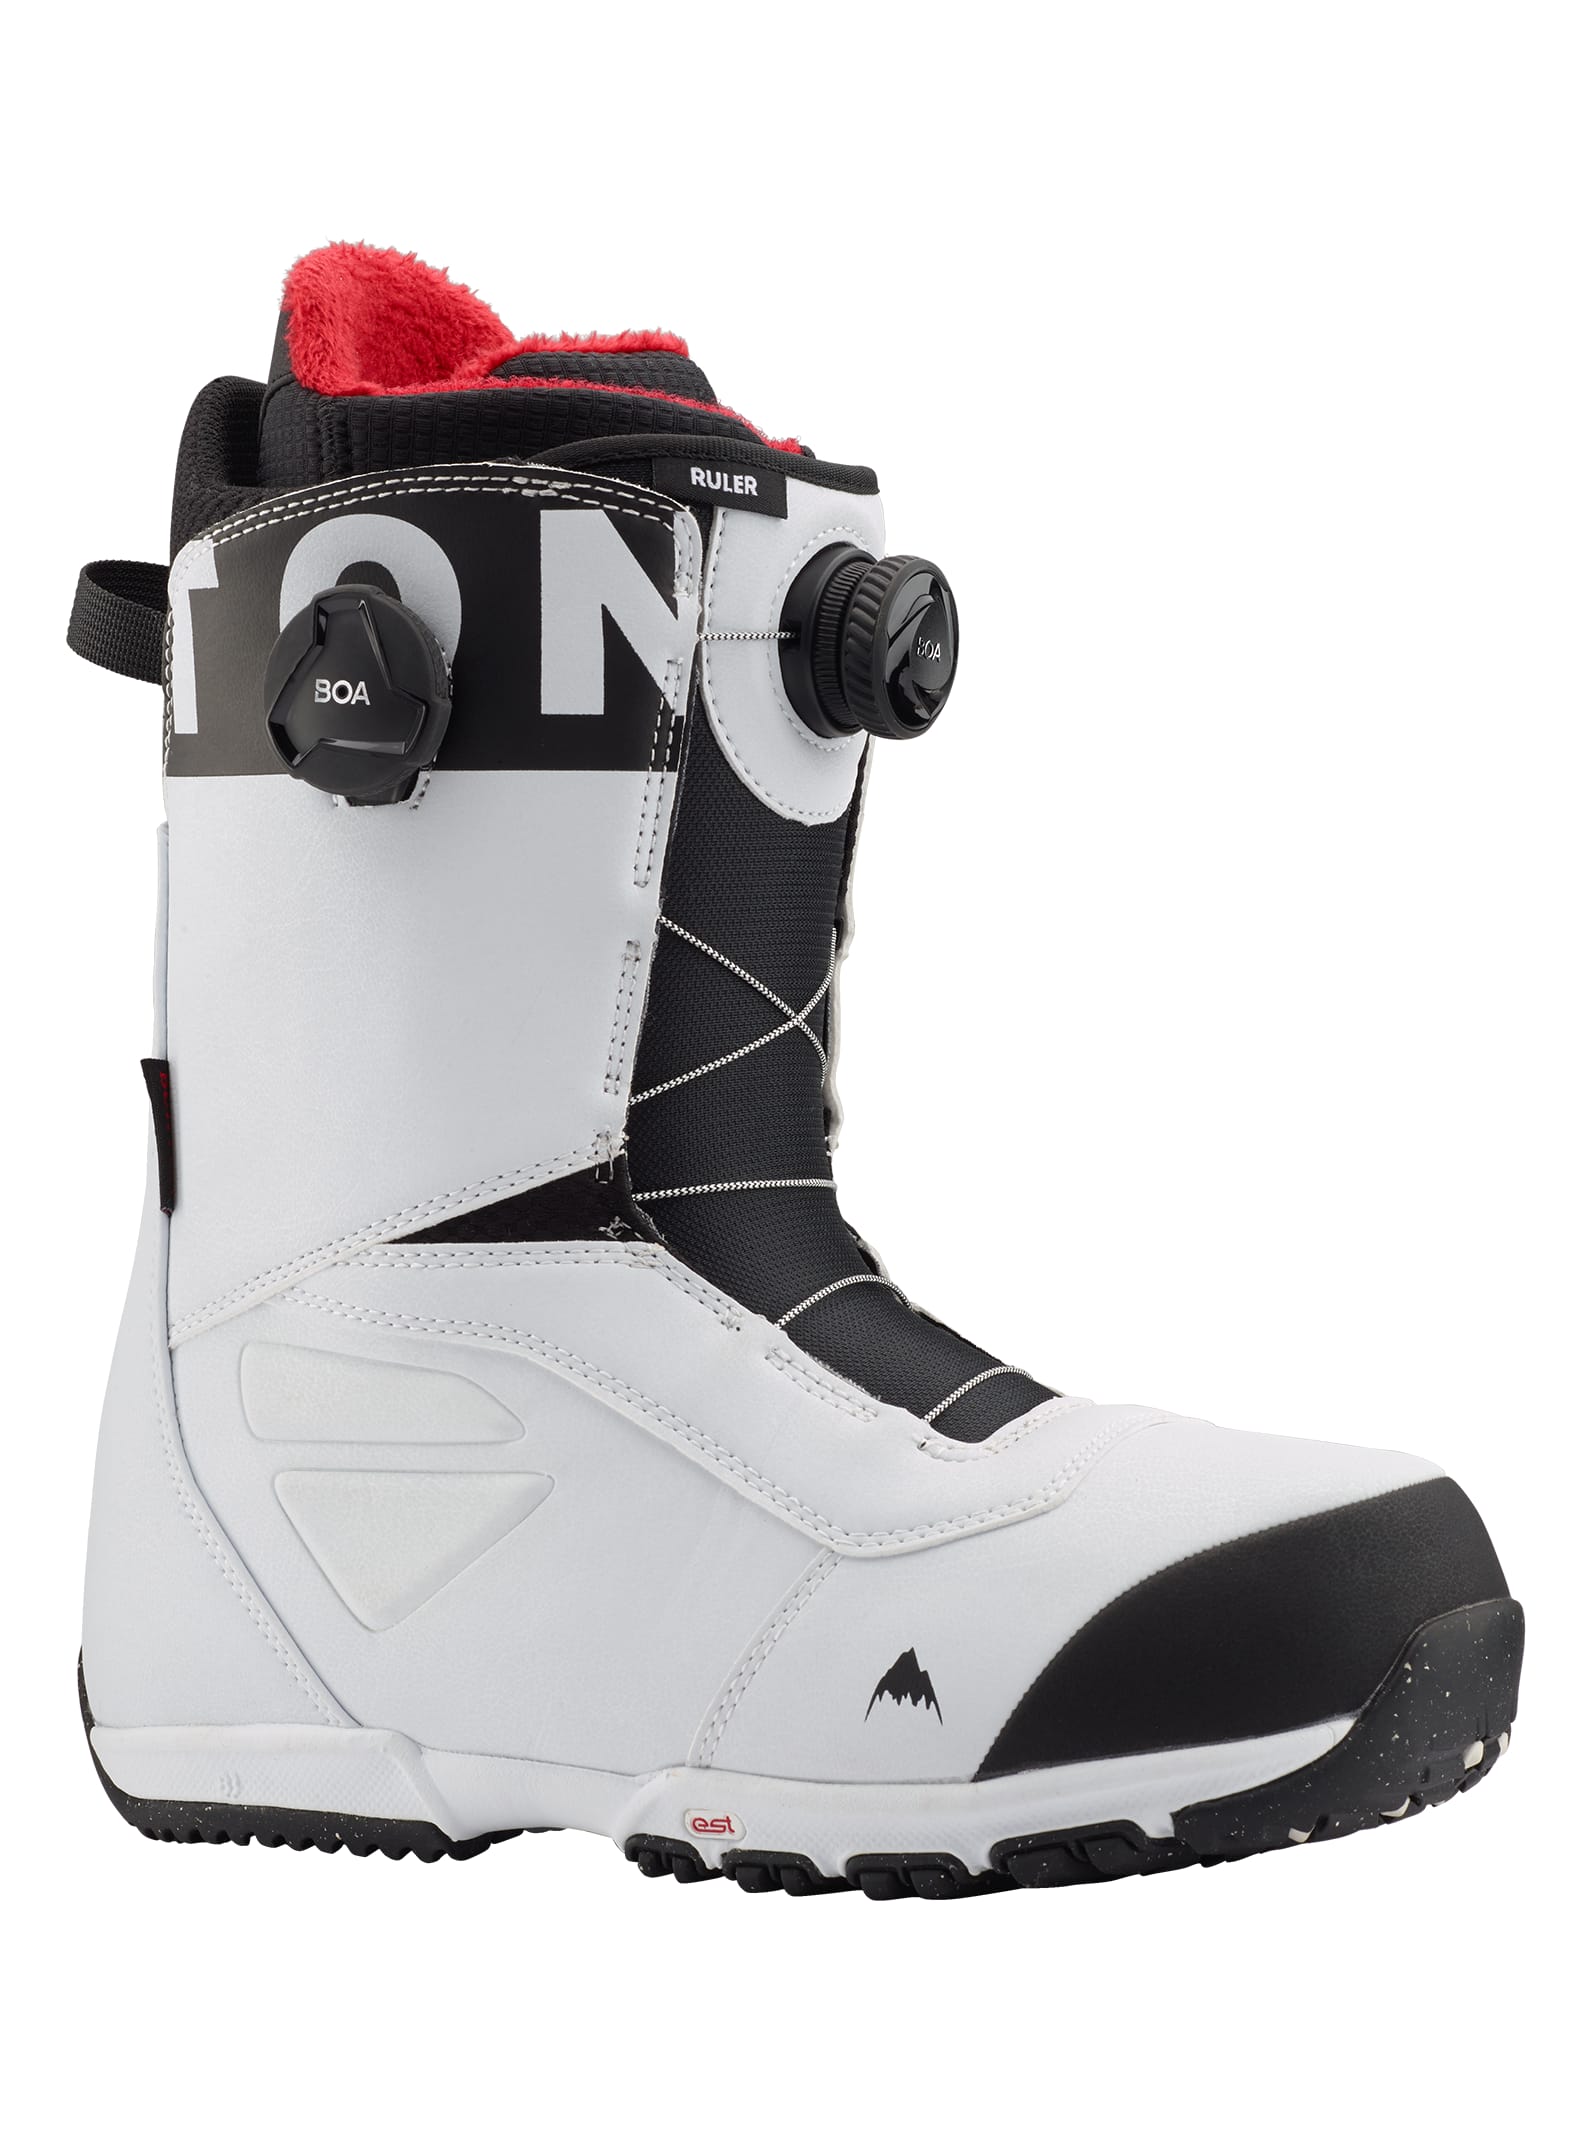 Men's Burton Ruler Boa® Snowboard Boot | Burton.com Winter 2020 US